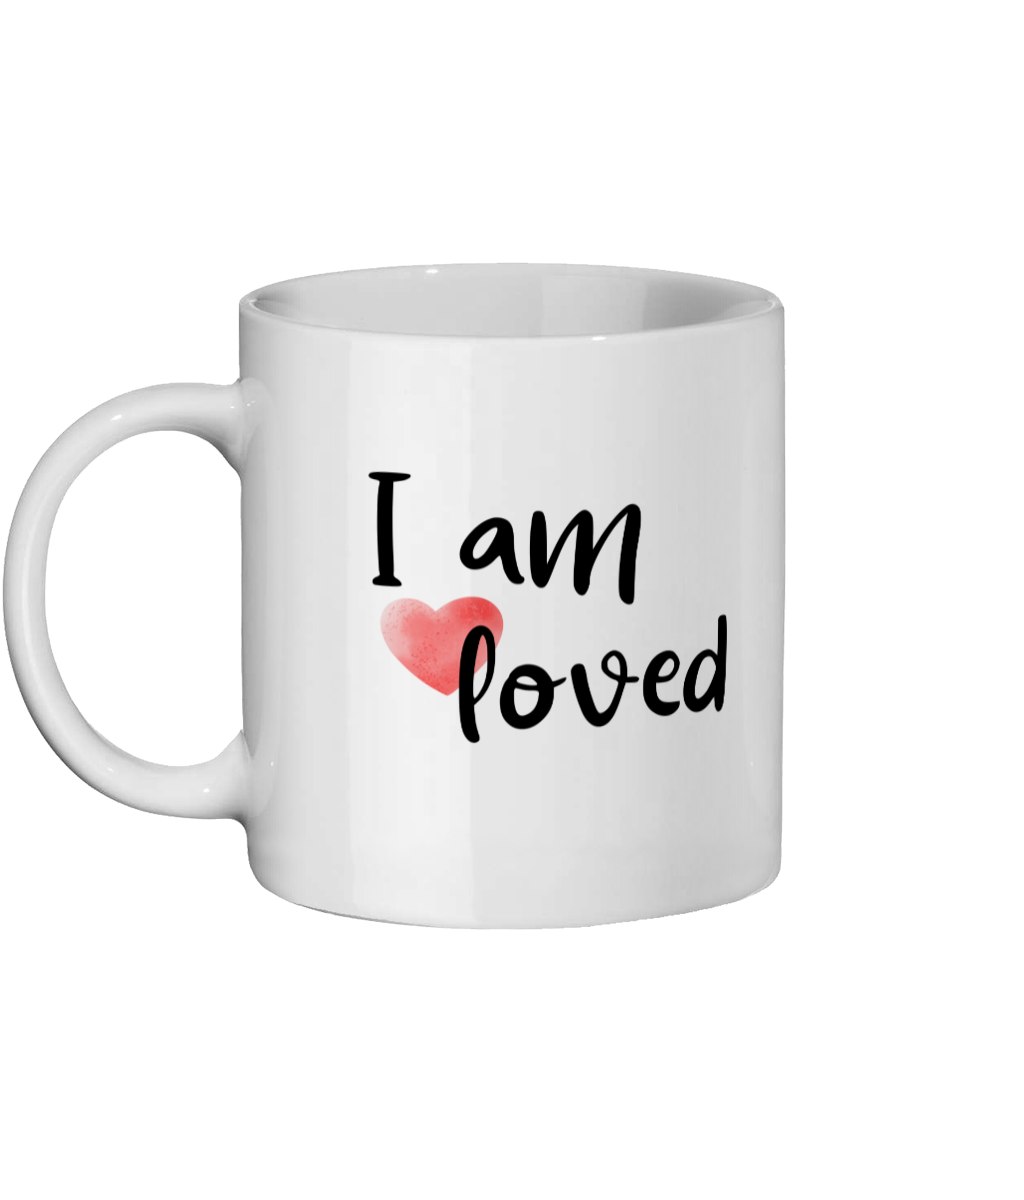 I Am Loved. .11 oz mug. Daily Affirmations, Motivation, Inspiration. Perfect Gift.